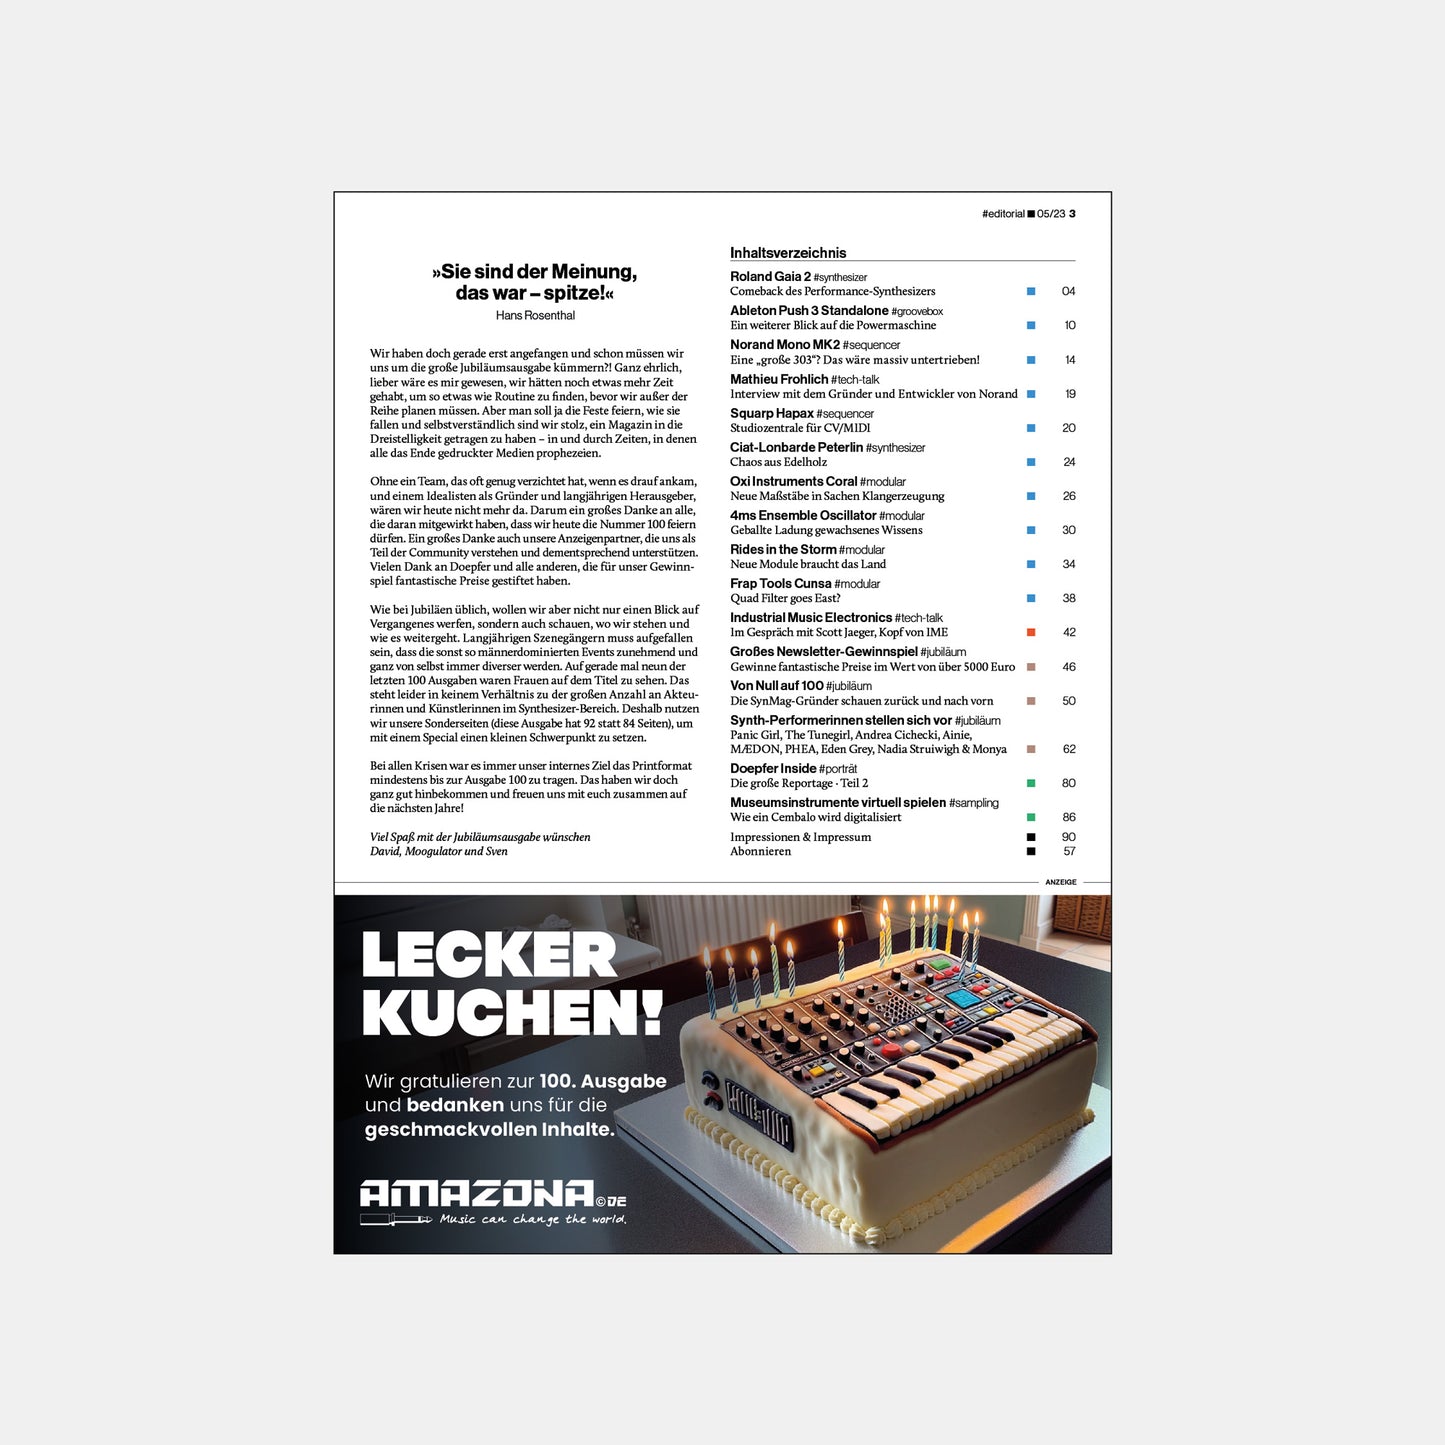 Synthesizer Magazin | Ausgabe 100 | Dezember 2023 | epaper